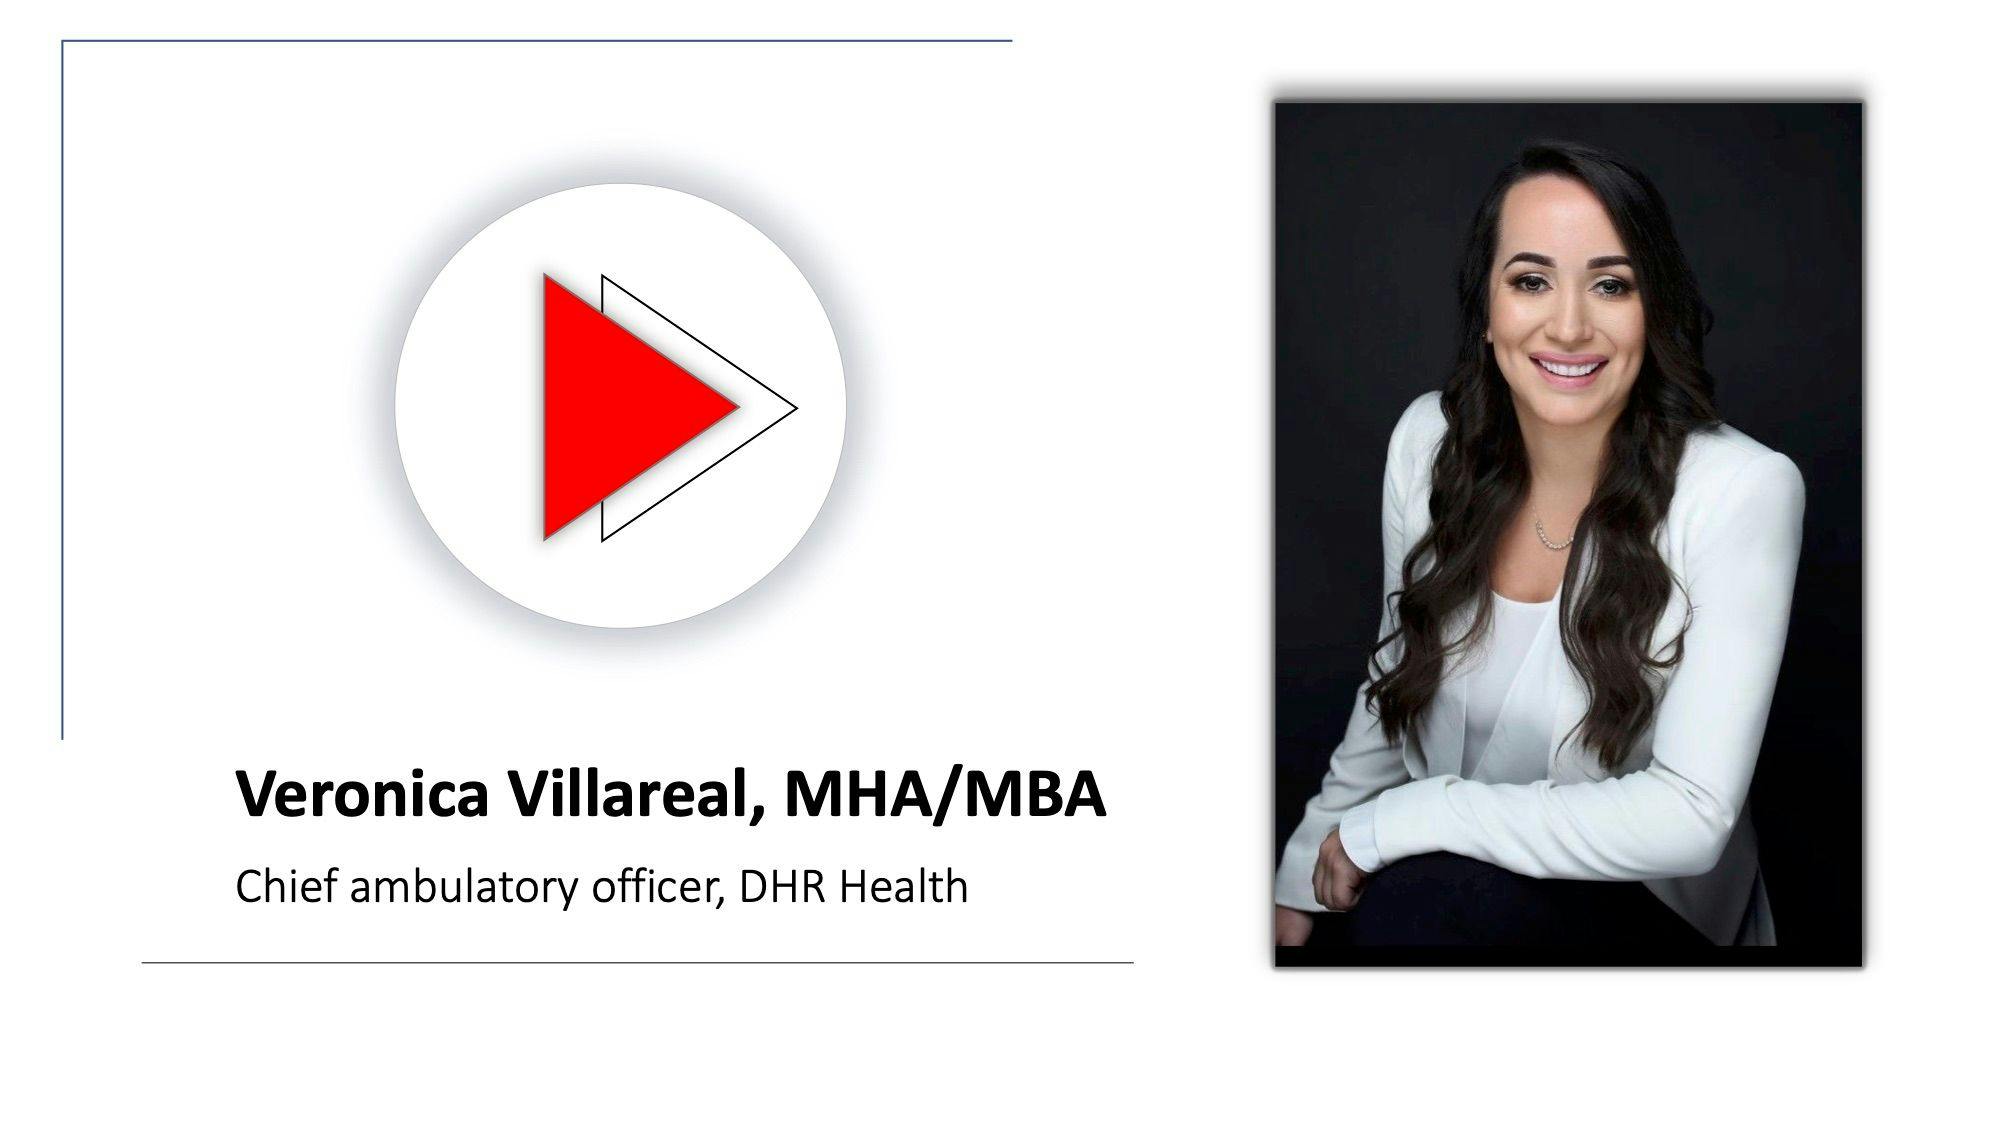 Veronica Villareal, MHA/MBA gives expert advice